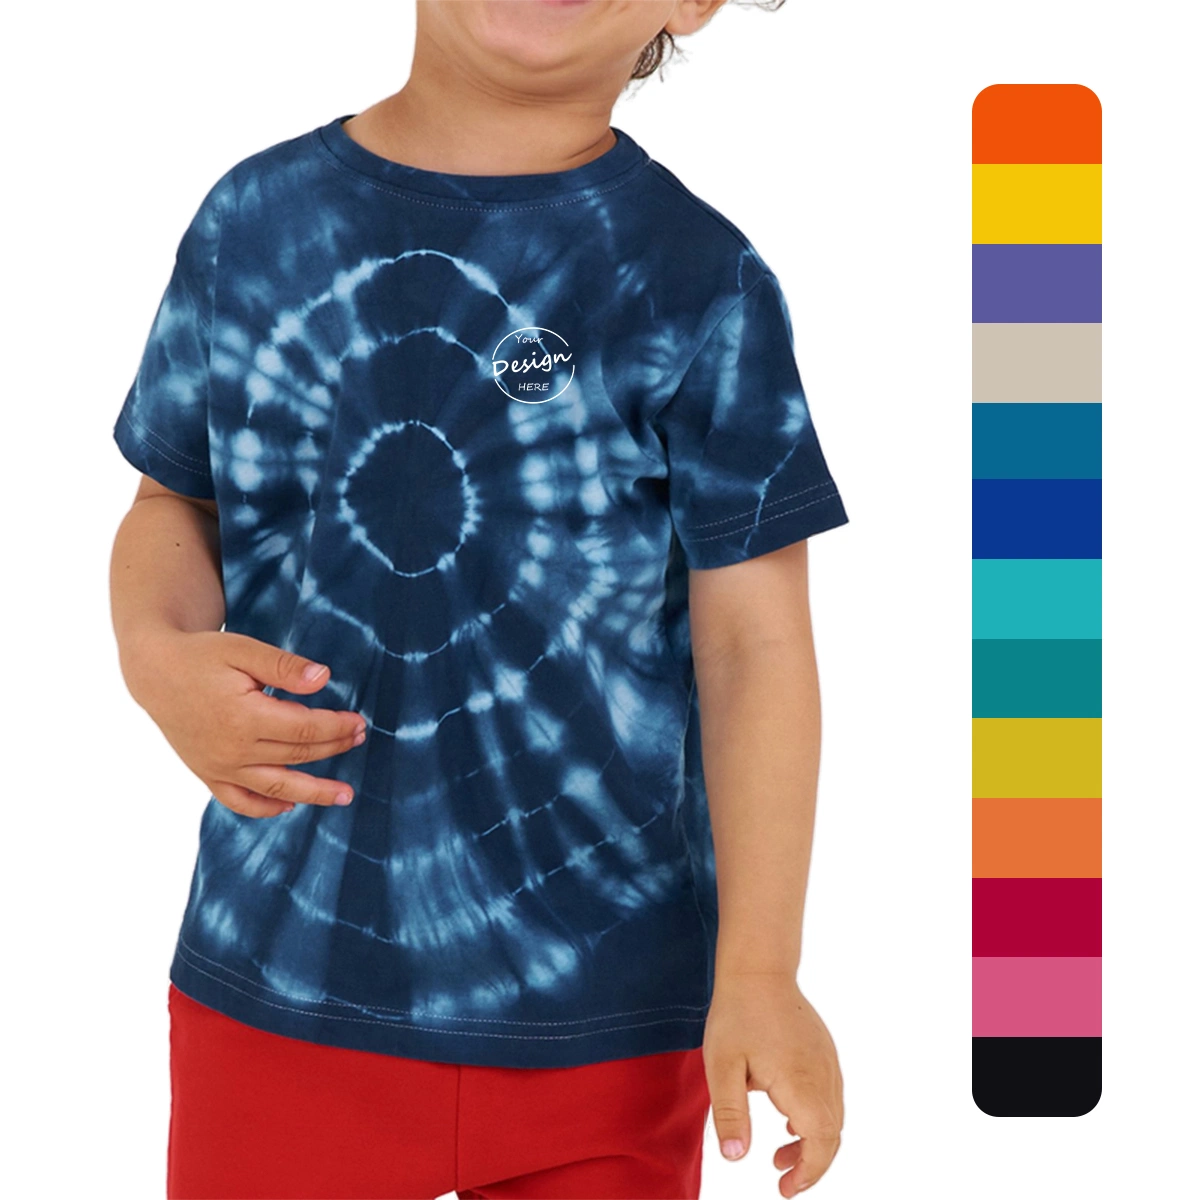 Tie Dye Kids T Shirts Multi Colored High Quality Cotton Shirts Kids Clothing Summer Tee Short Sleeve Shirts